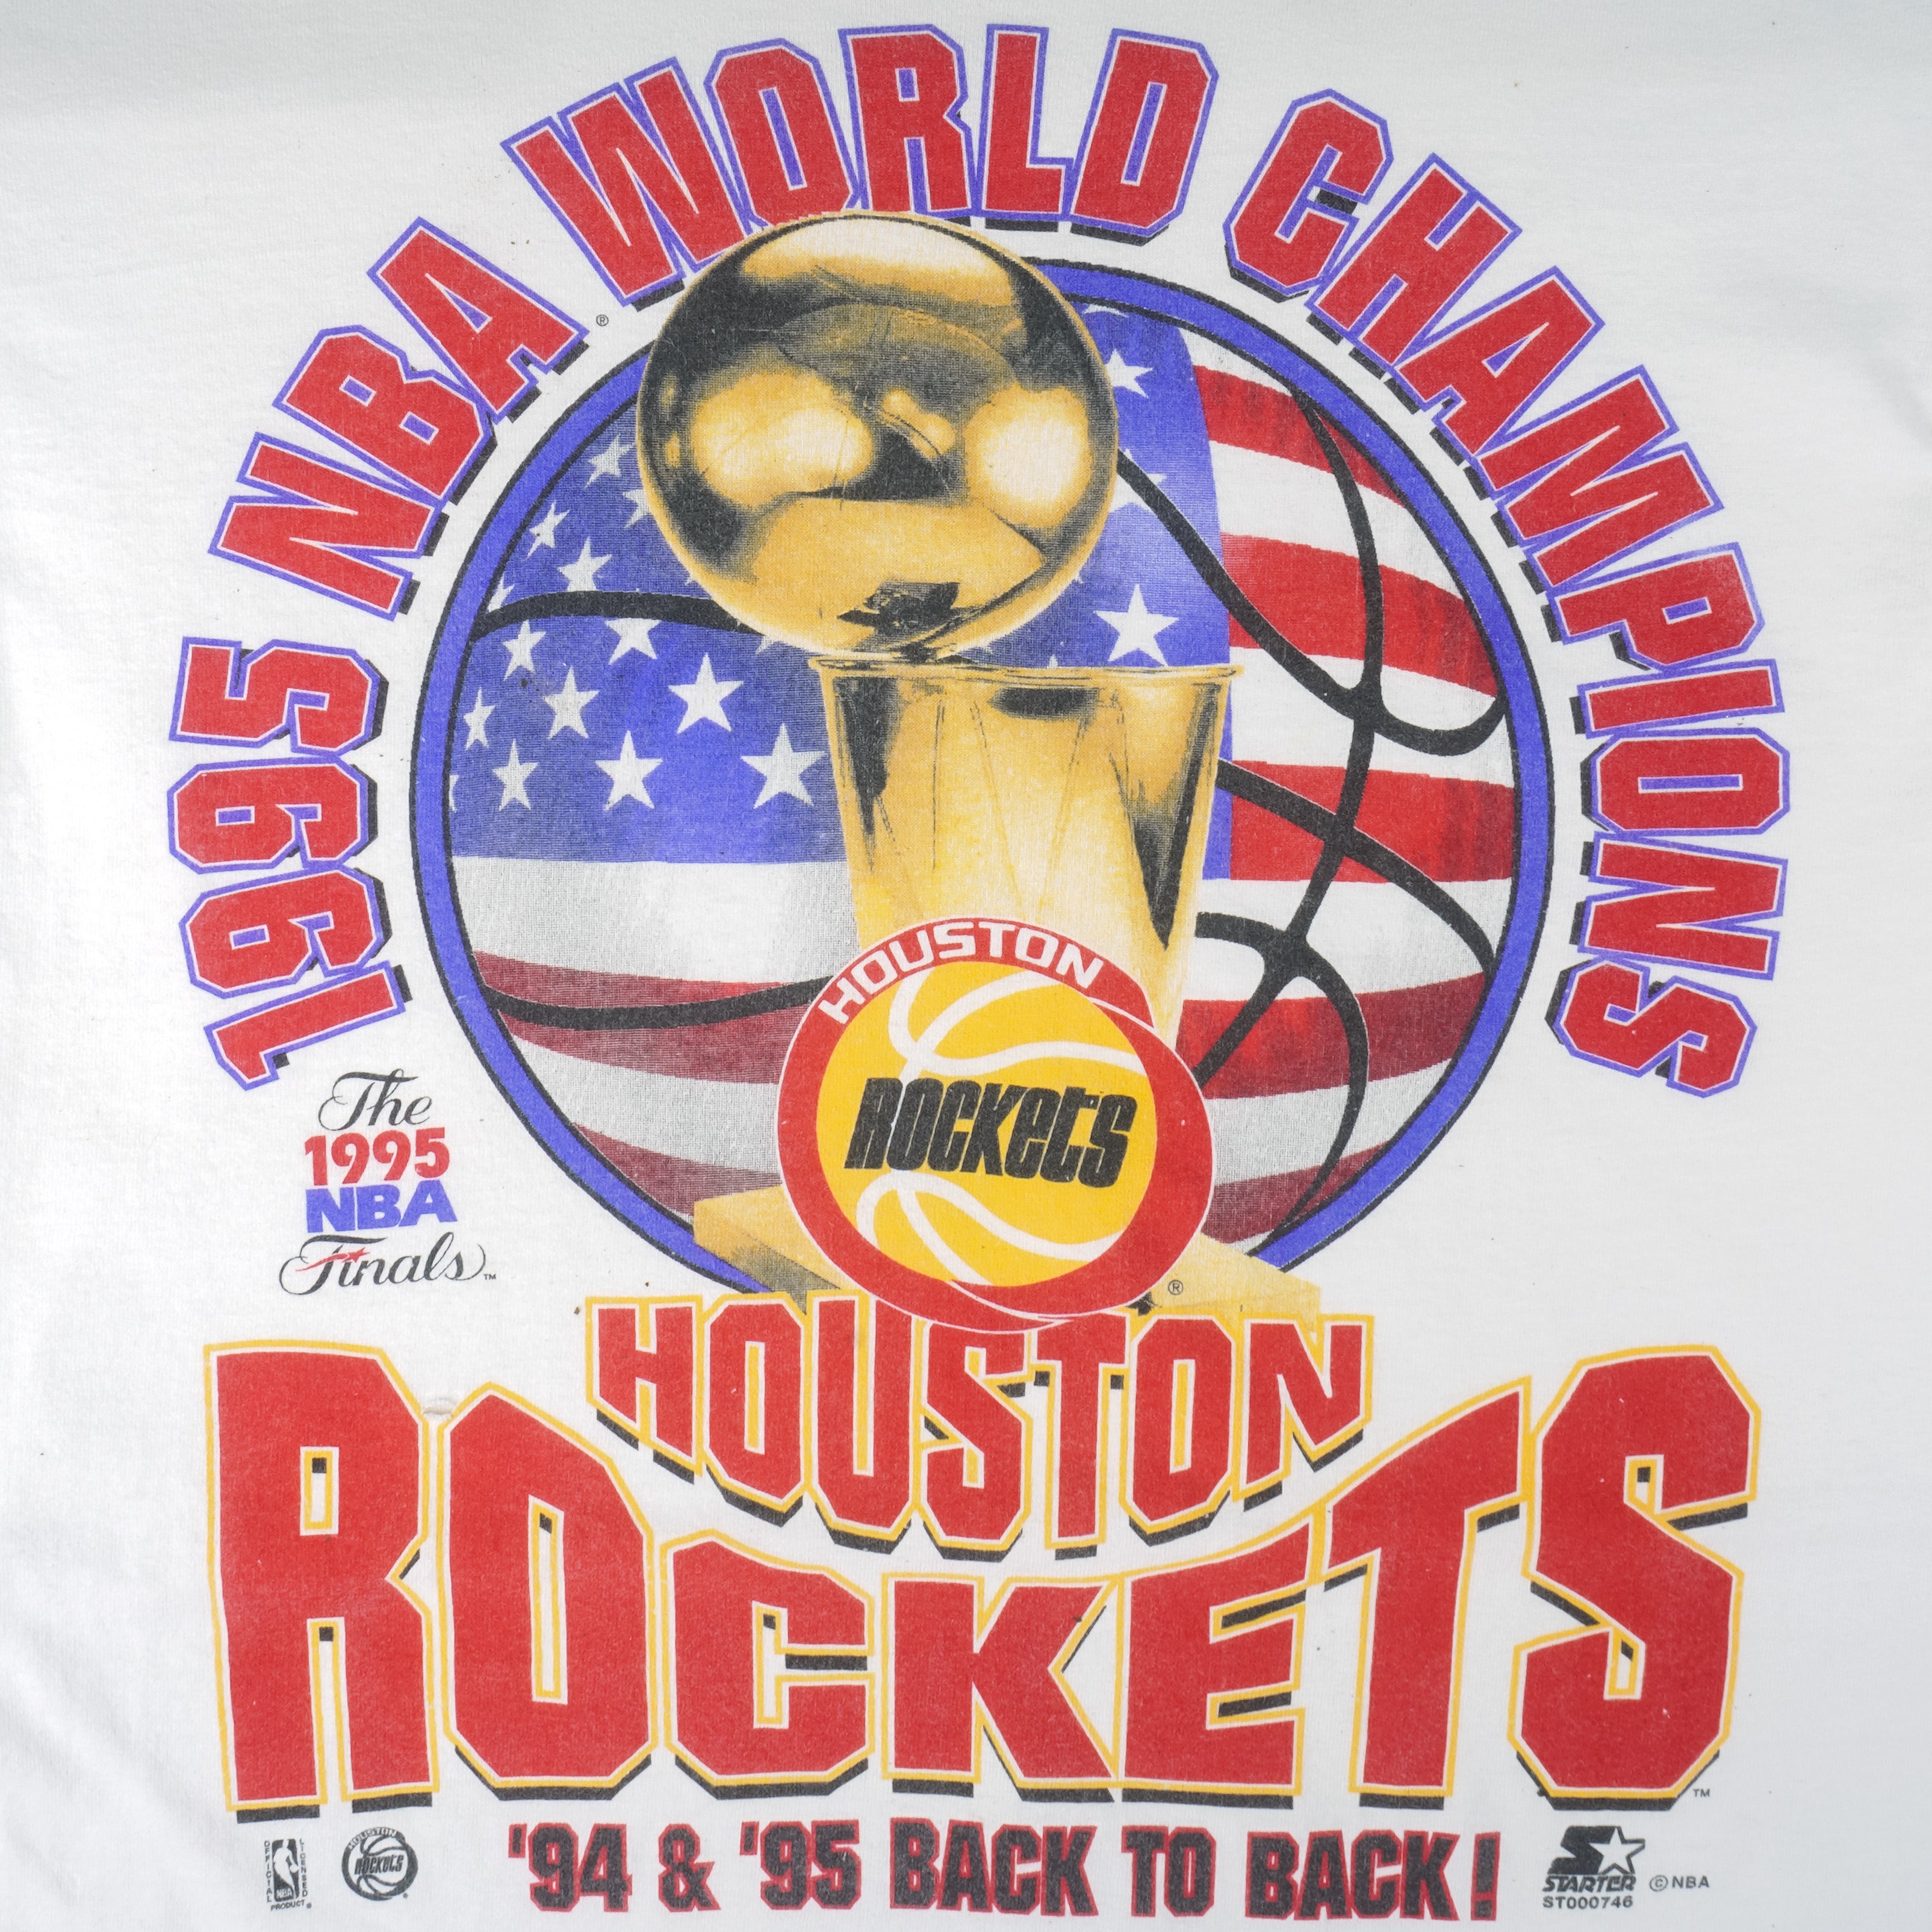 rockets championship shirt